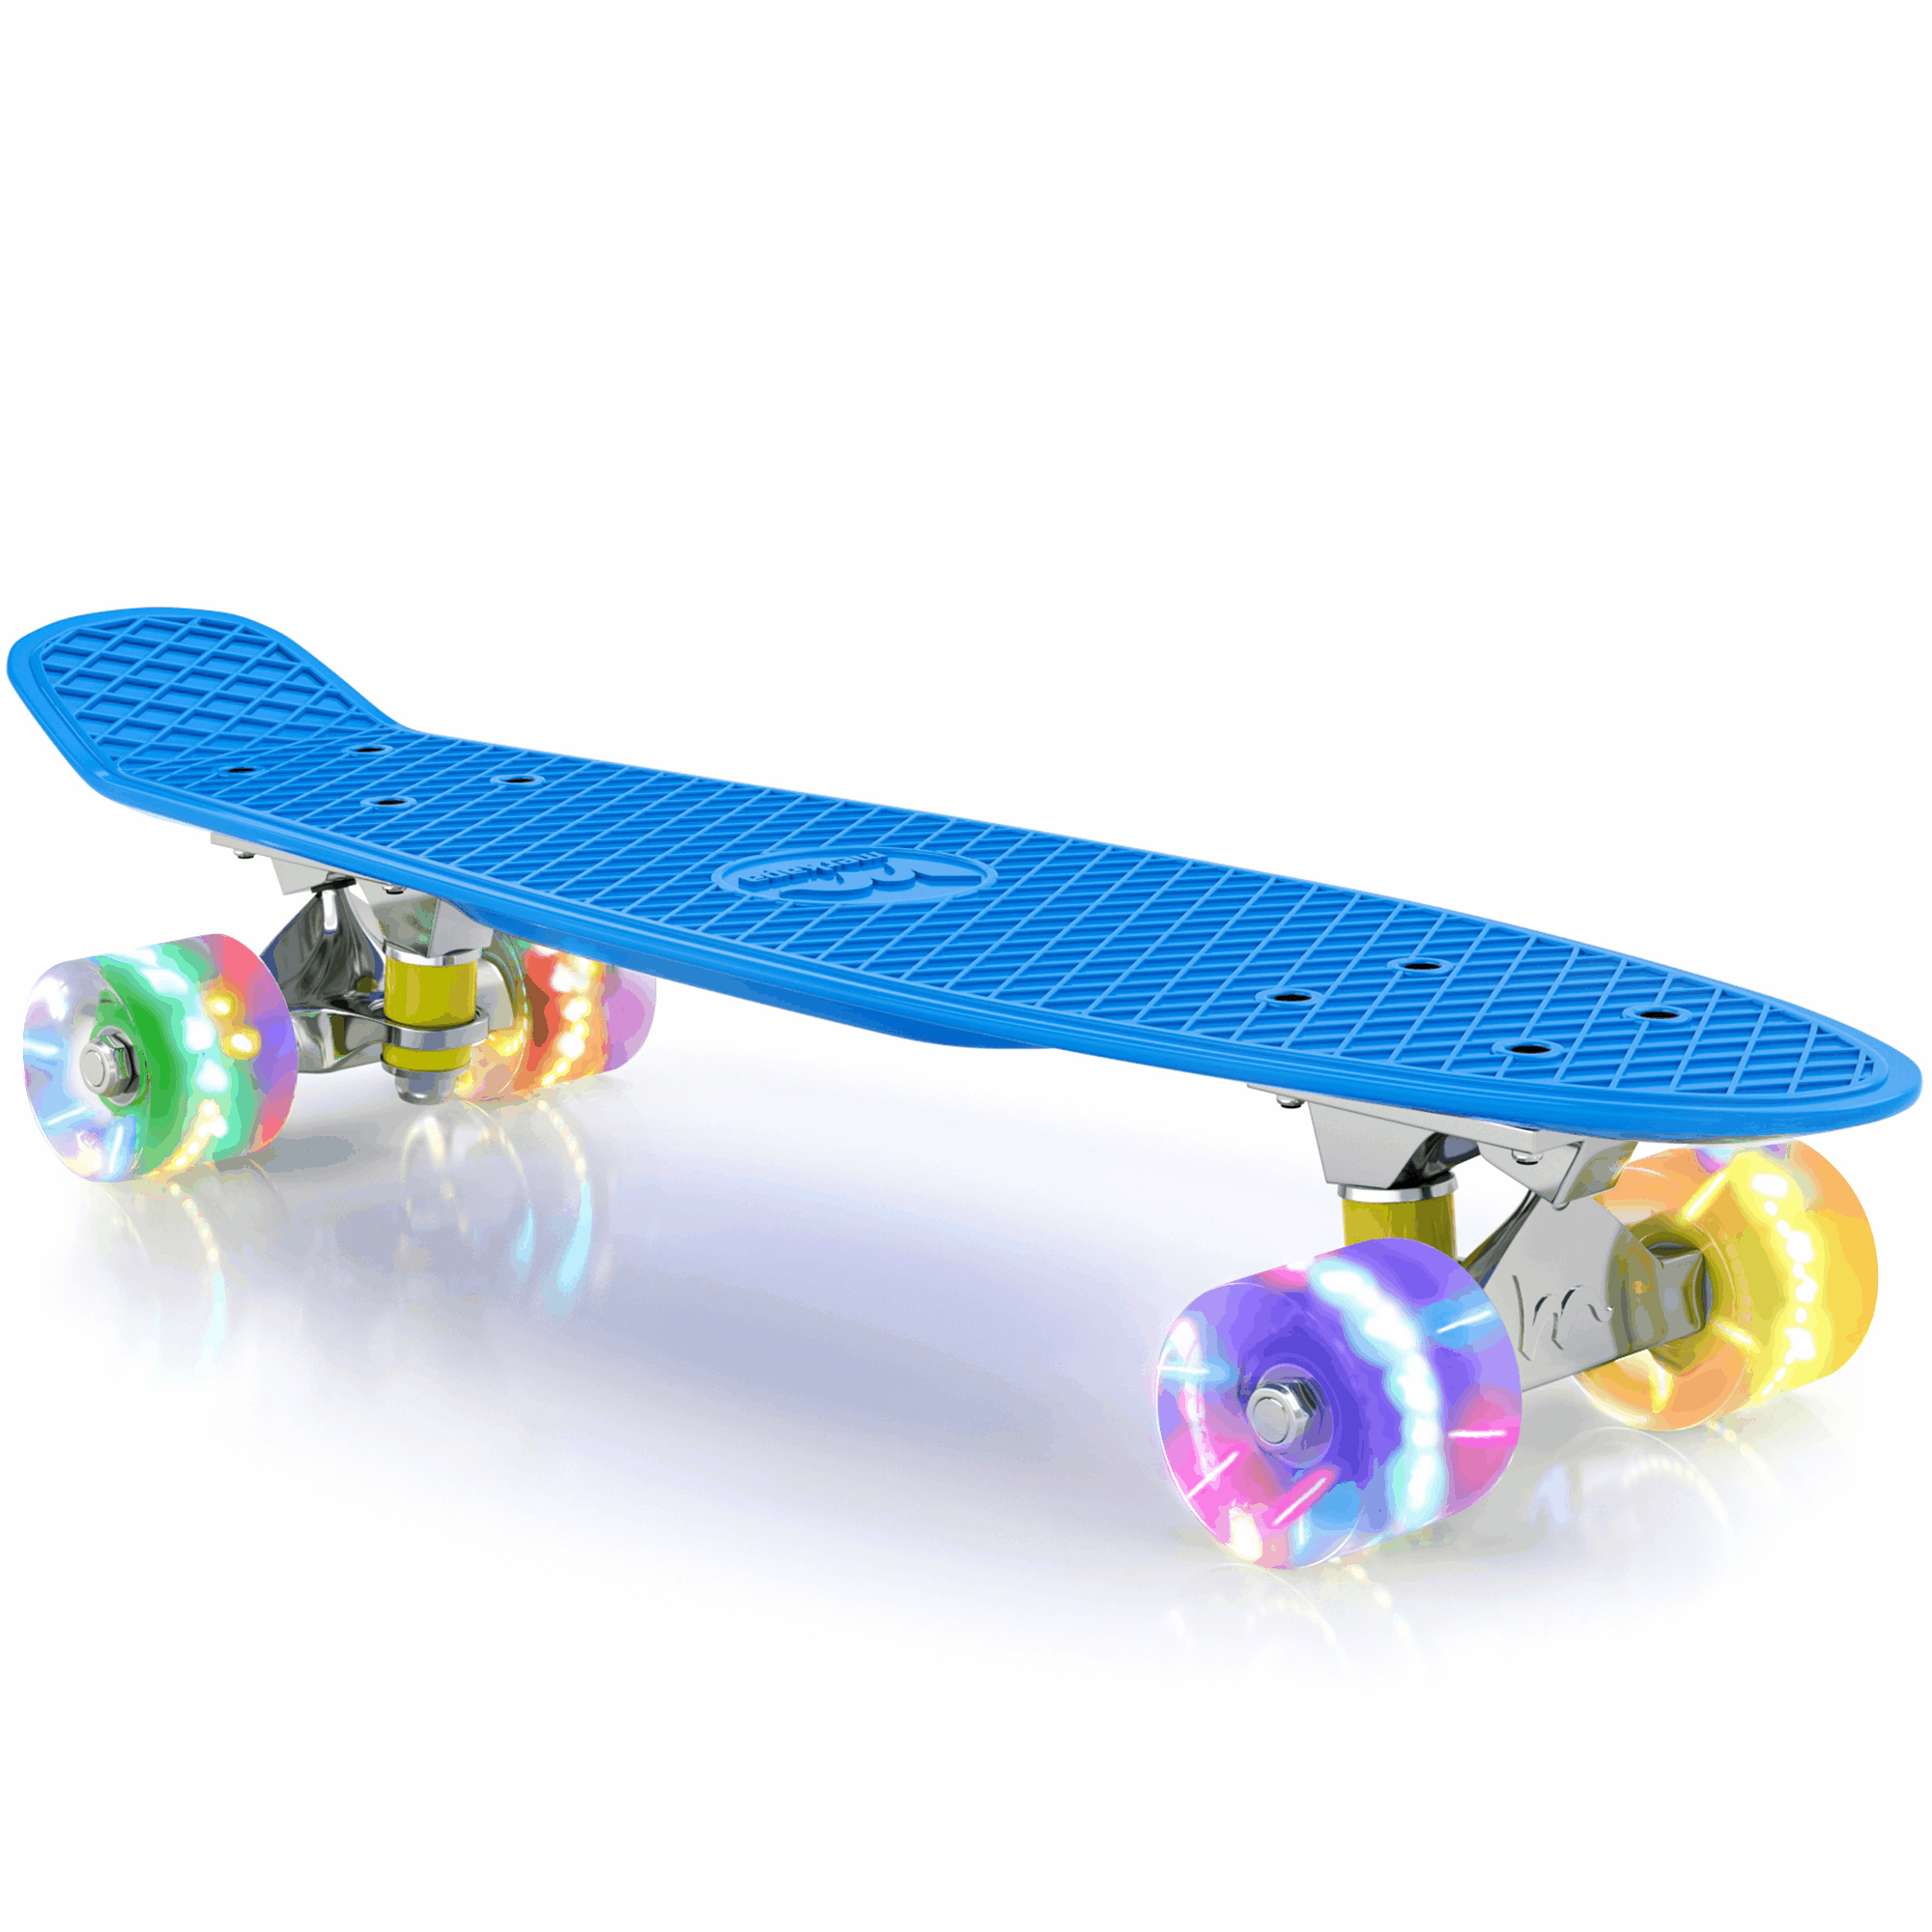 Merkapa 22" Skateboard Cruiser Plastic with Colorful LED Light Up Wheels for Beginners Kids Girls Adults Birthday Gift Children's Day Present (Pink) - Walmart.com